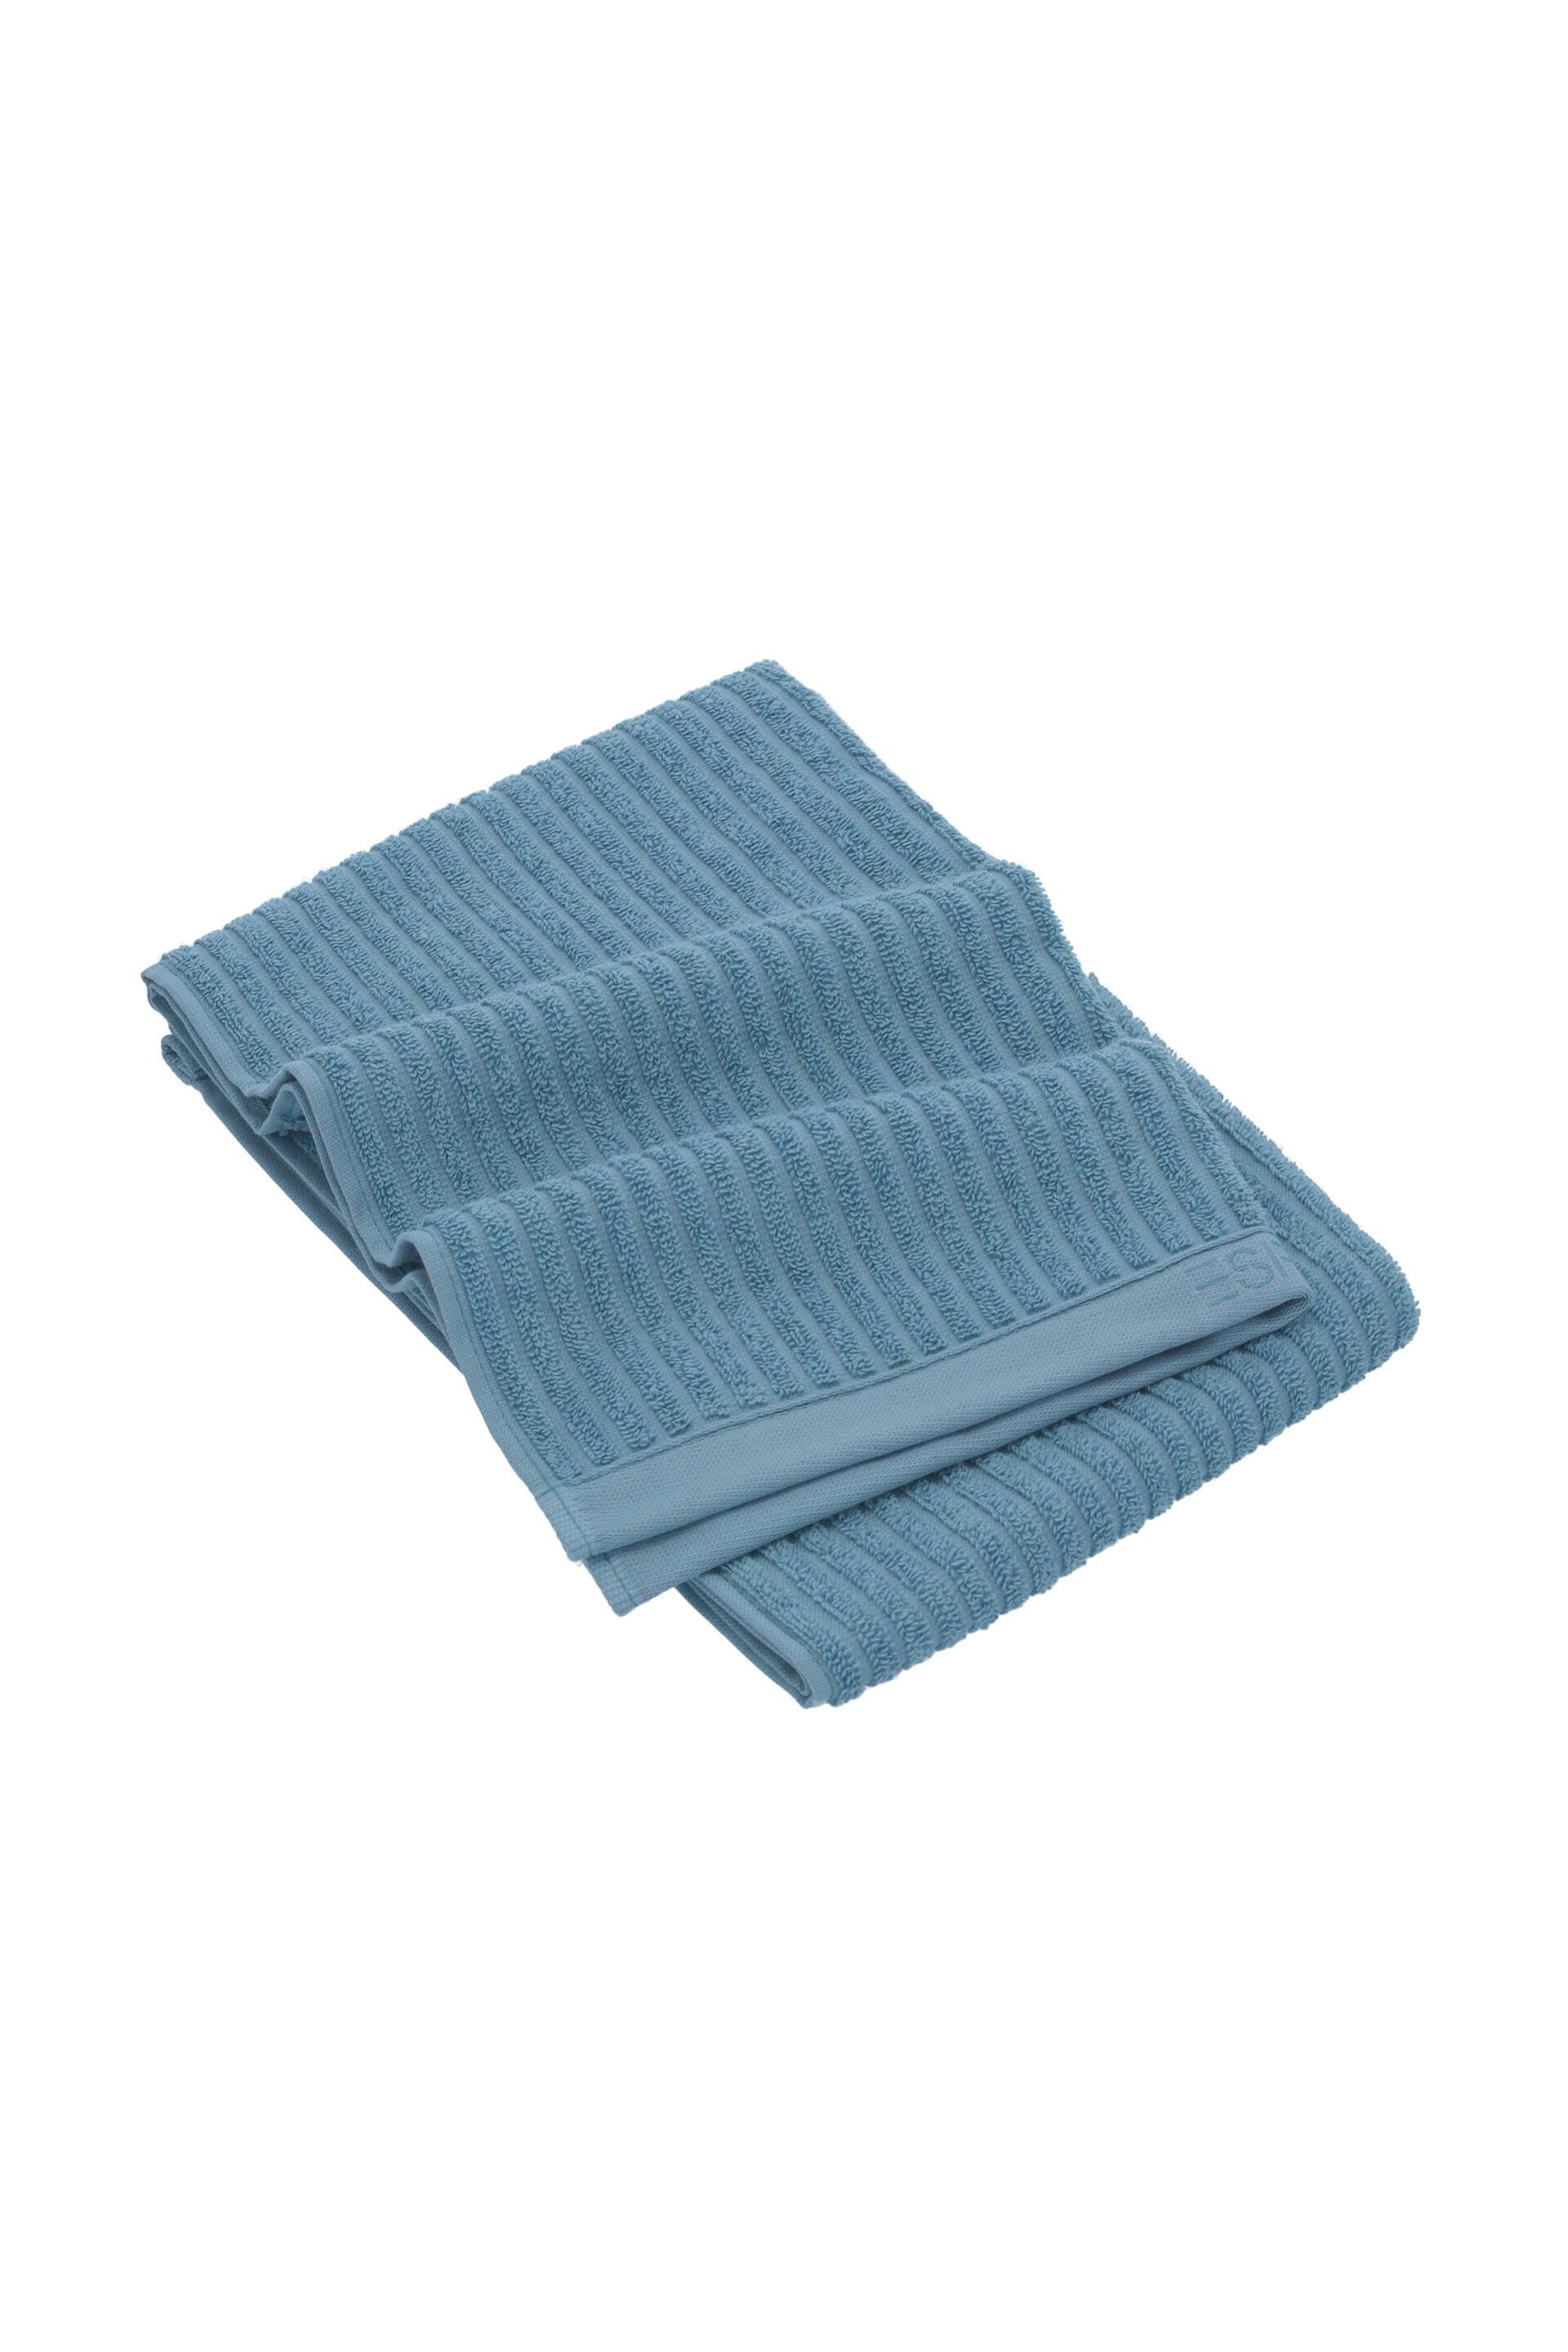 Esprit hand towel Modern lines